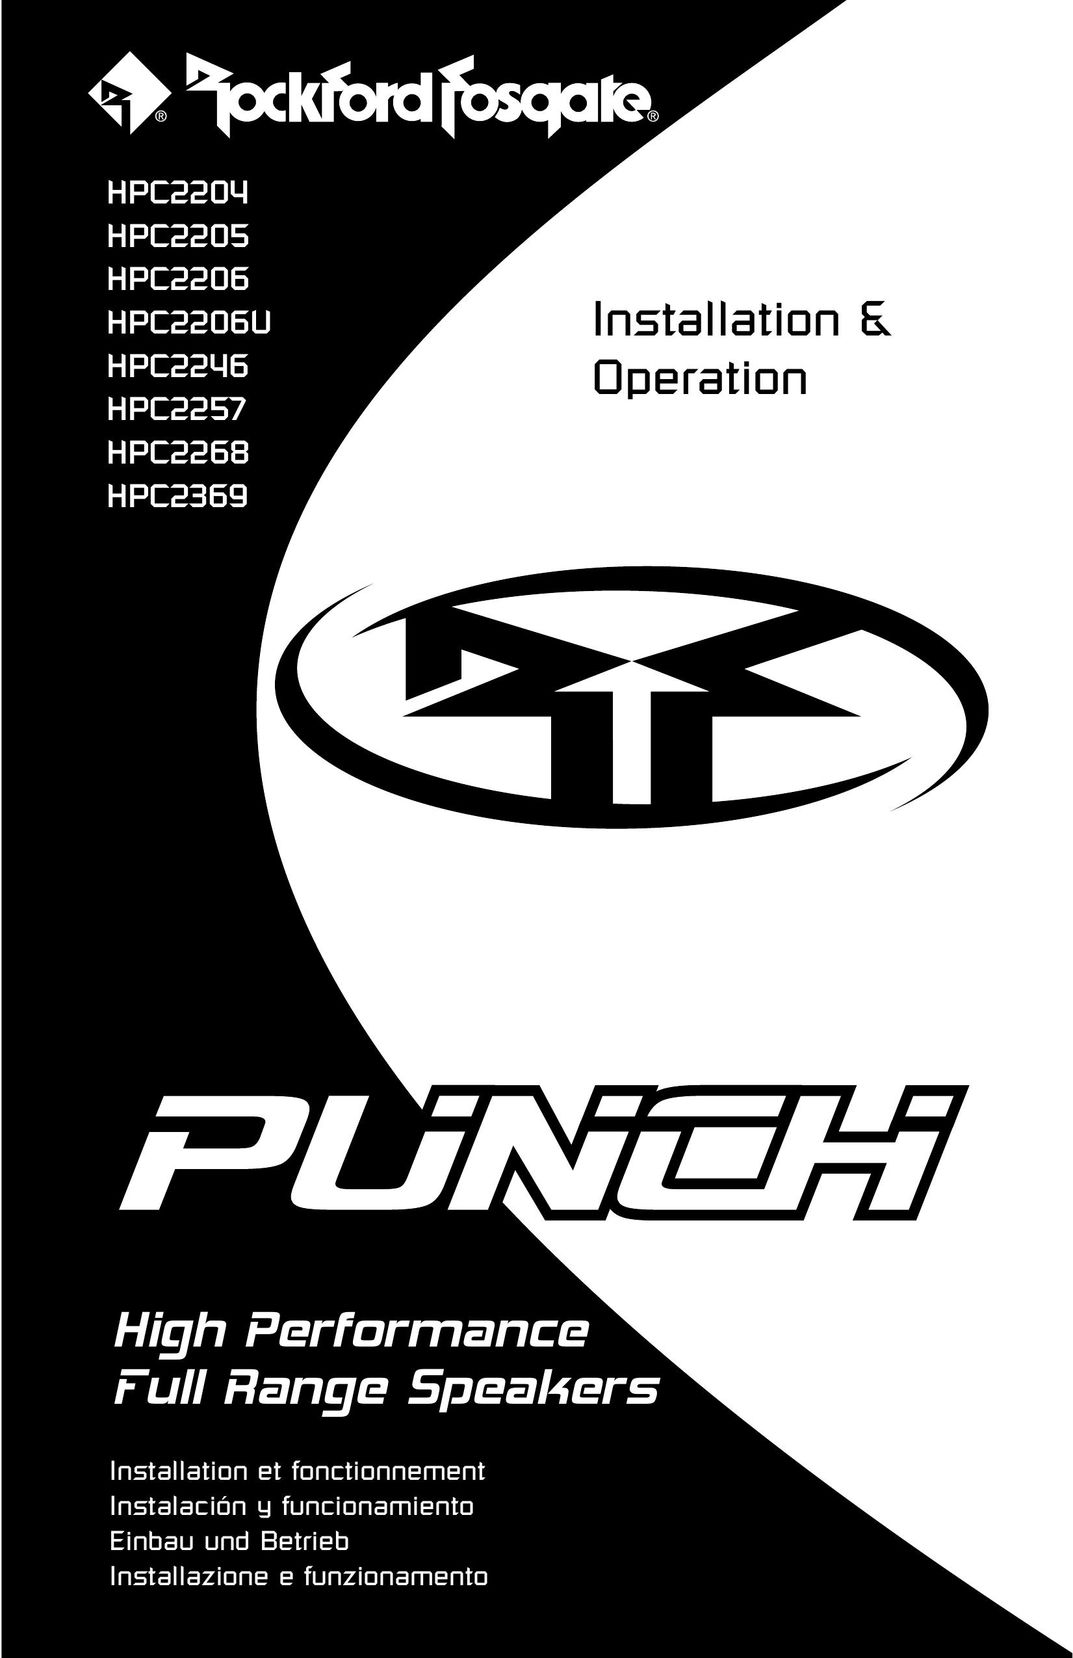 Rockford Fosgate HPC2204 Portable Speaker User Manual